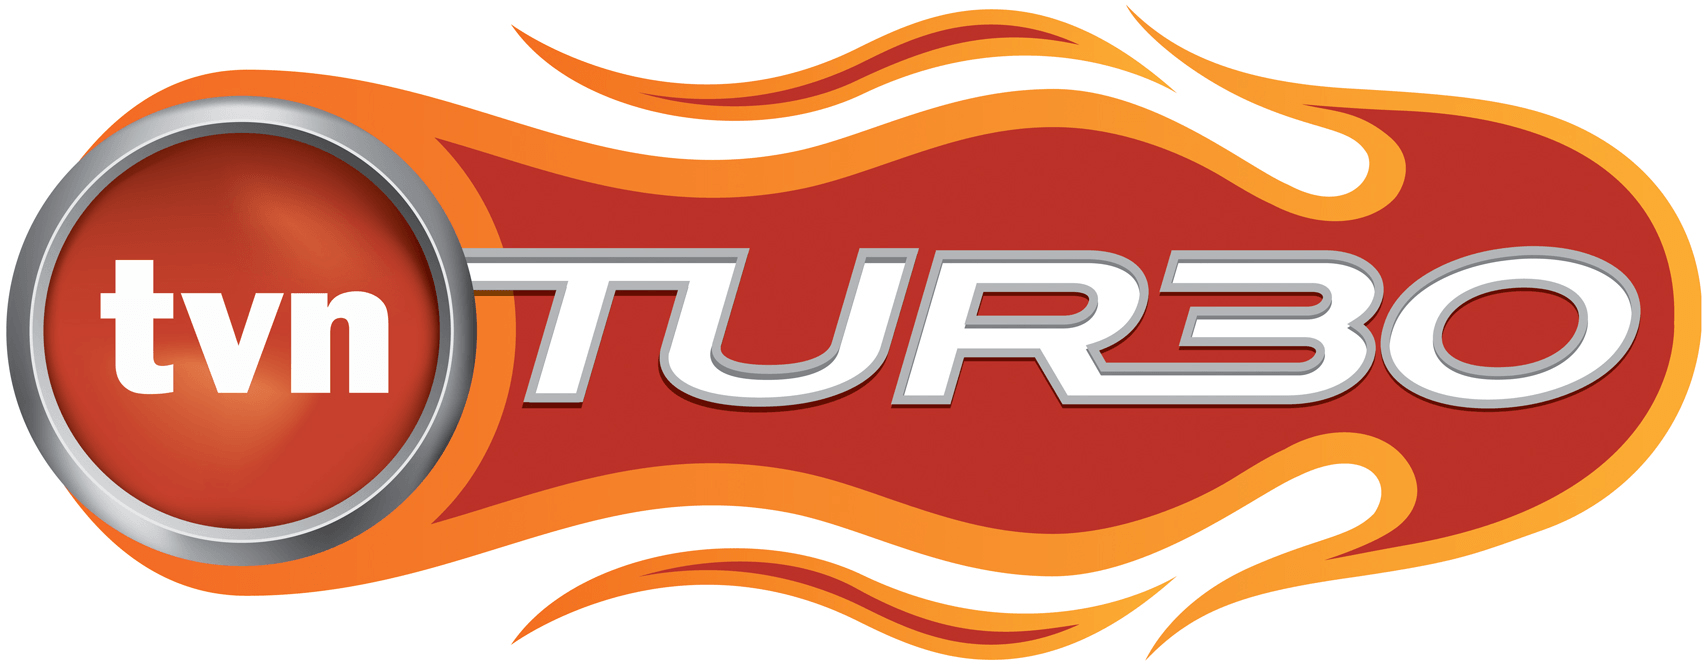 Turbo Logo - Image - TVN Turbo logo.png | Logopedia | FANDOM powered by Wikia